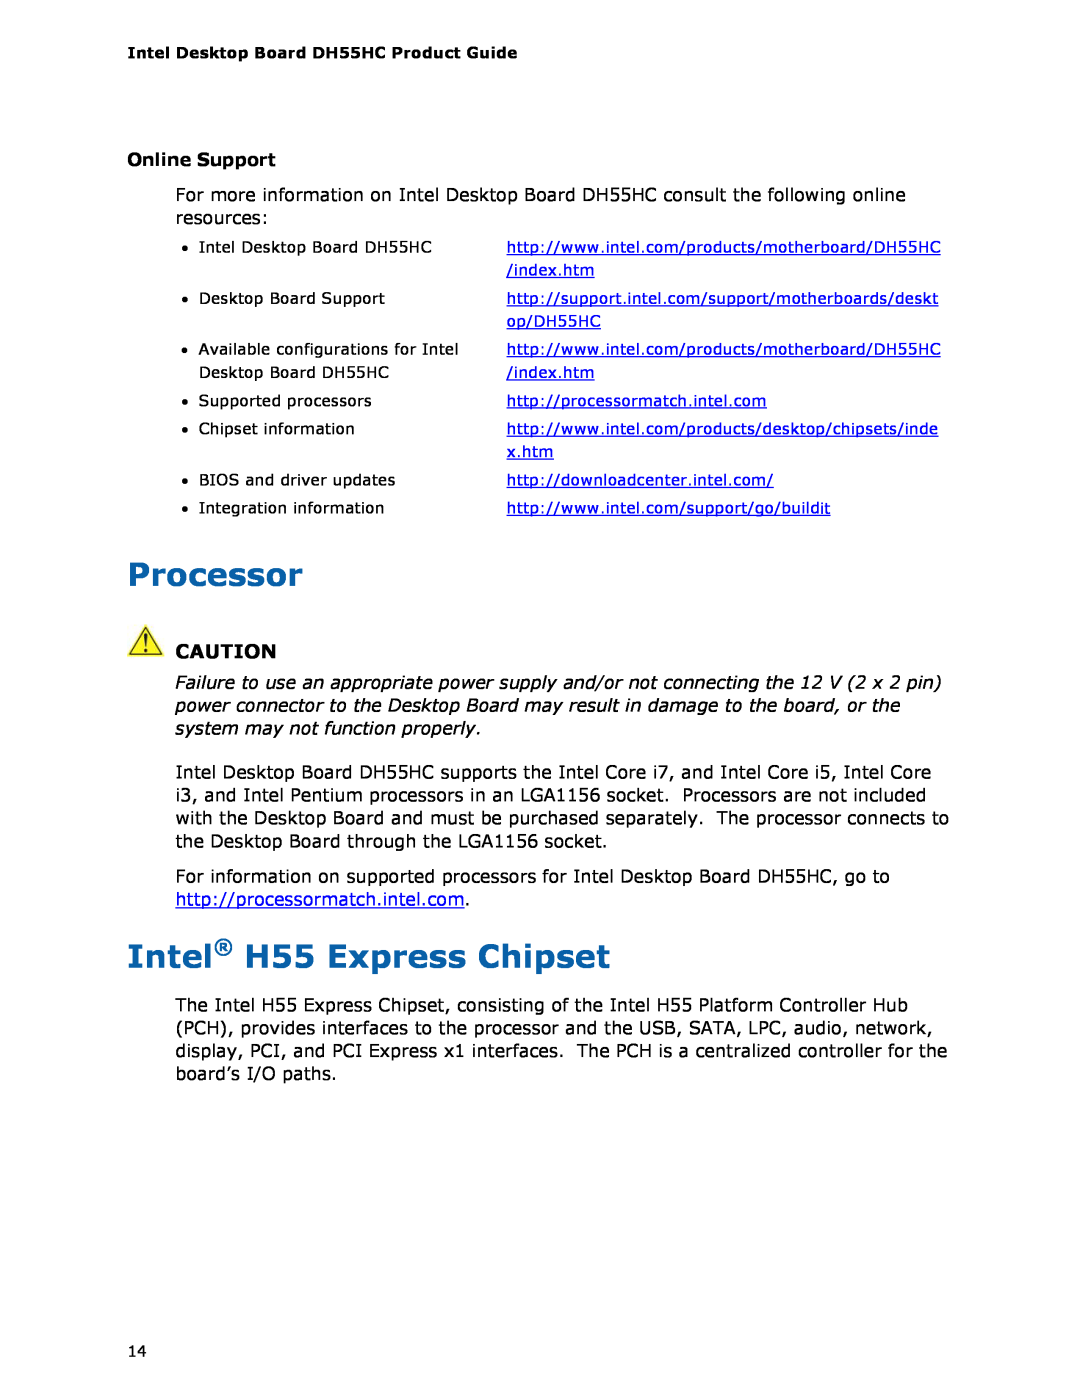 Intel BOXDH55HC manual Processor, Intel H55 Express Chipset, Online Support 